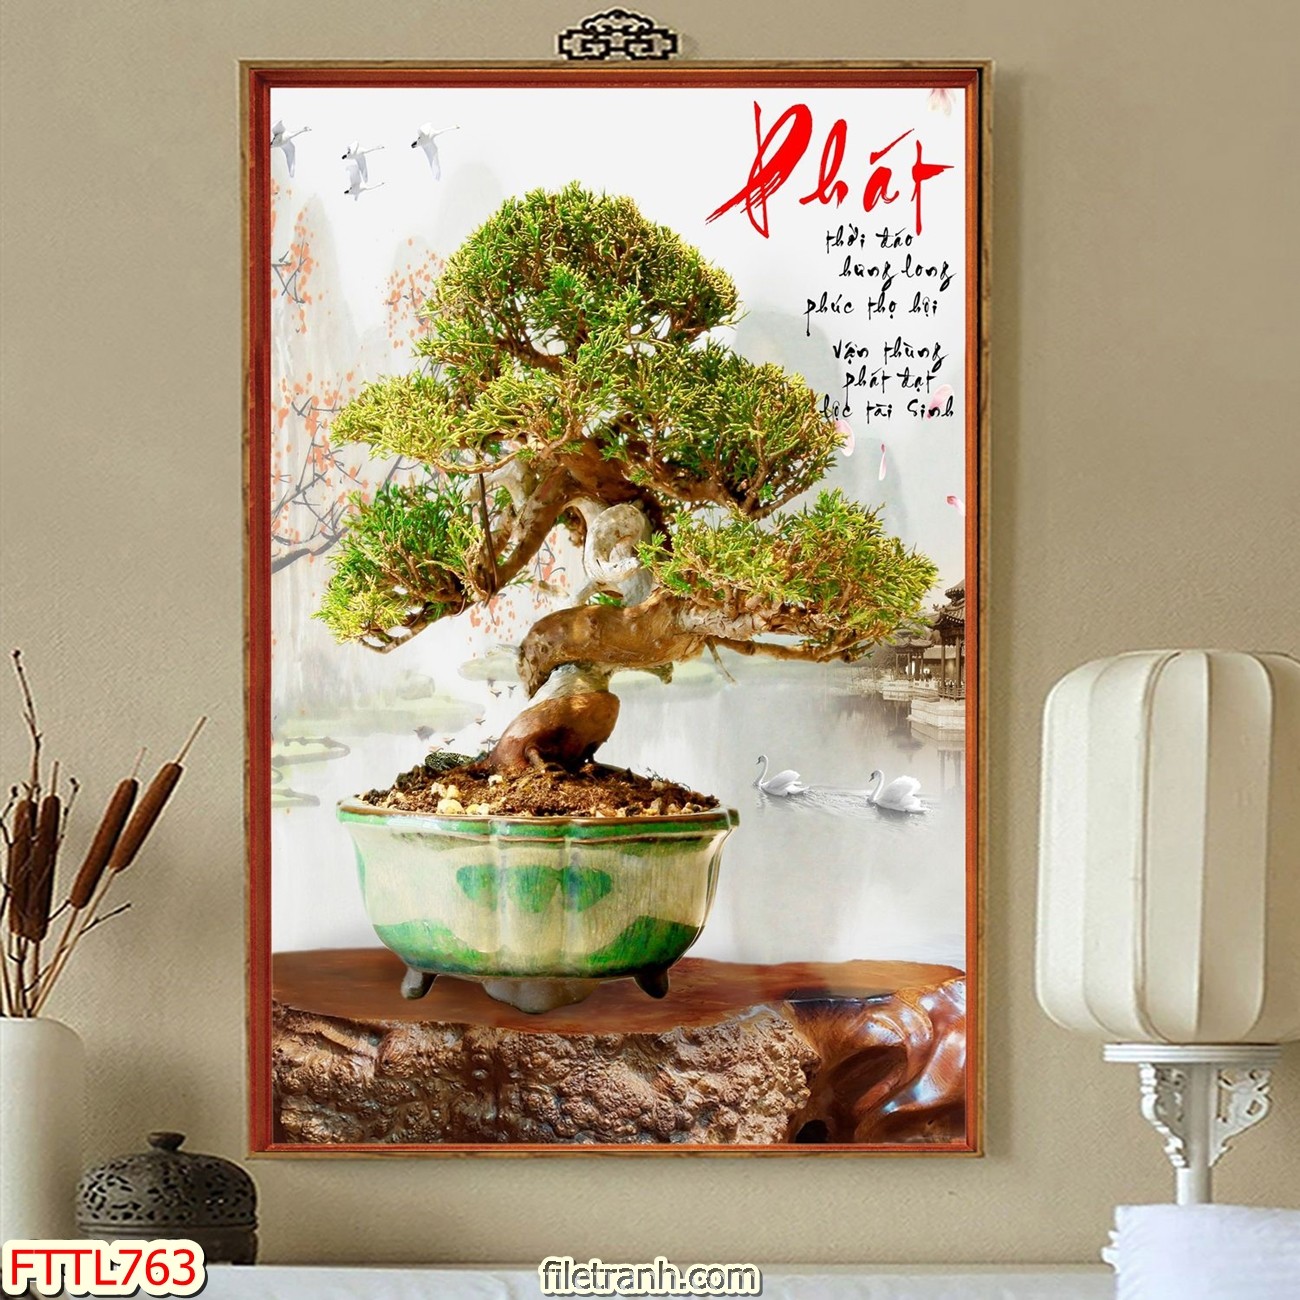 https://filetranh.com/file-tranh-chau-mai-bonsai/file-tranh-chau-mai-bonsai-fttl763.html